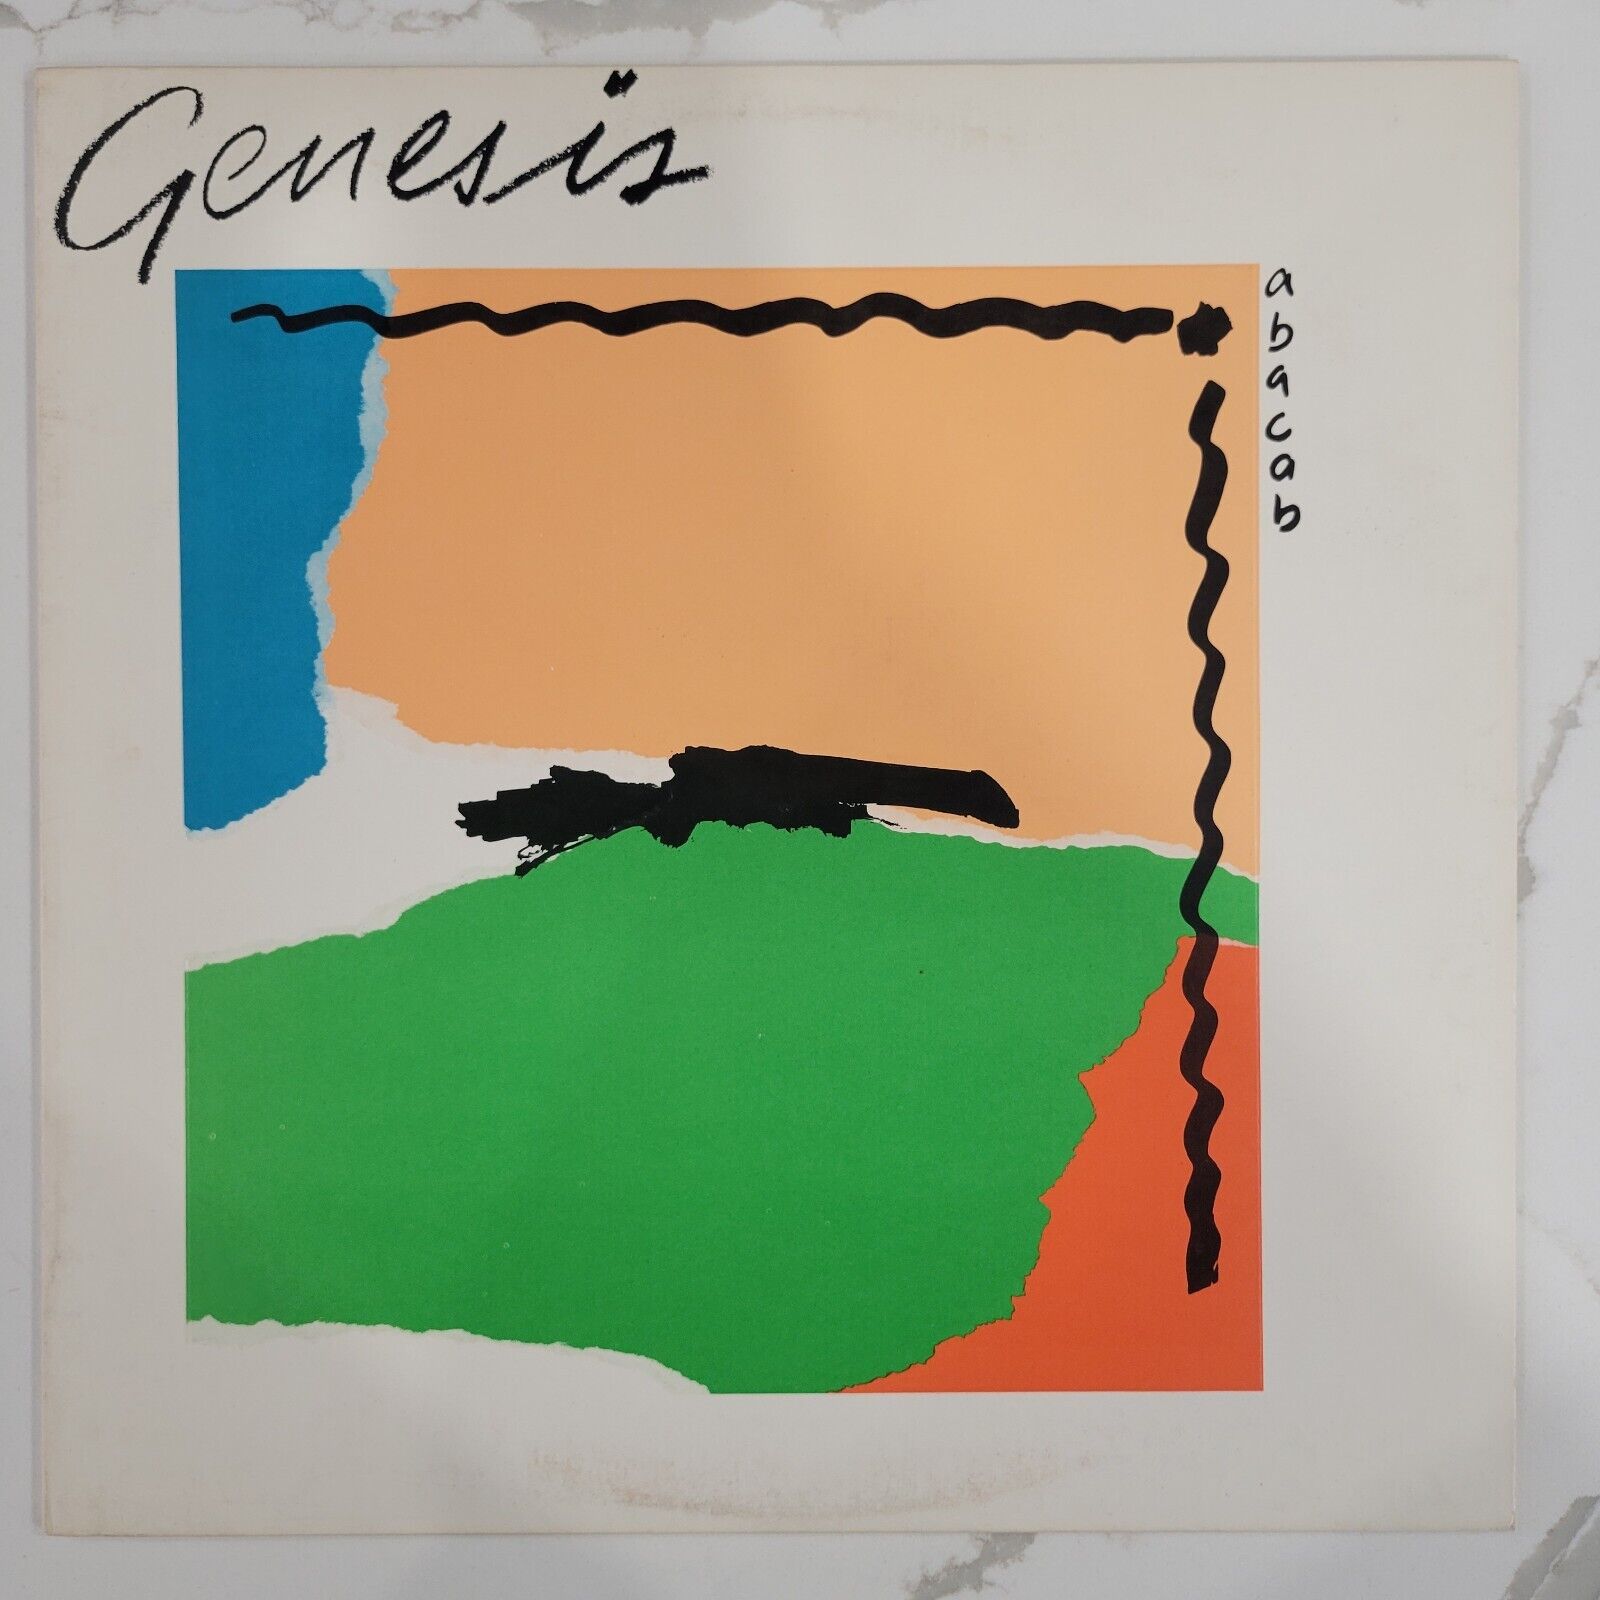 Genesis - Abacab Vinyl LP - 1981 First Press - "D" Cover - Atlantic SD 19313